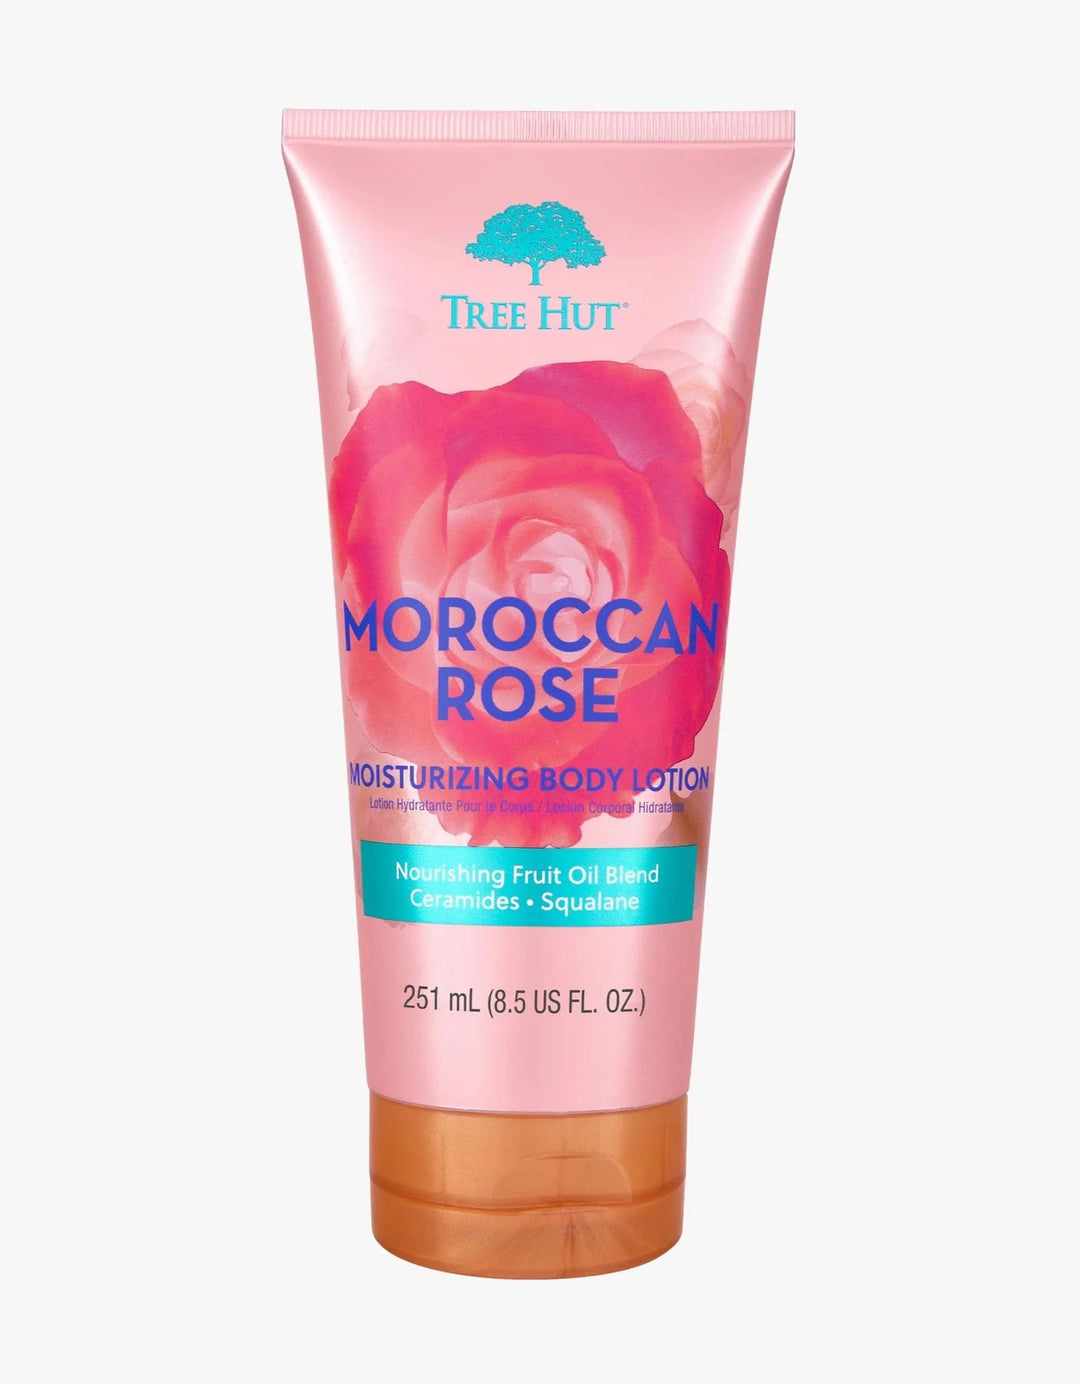 Tree Hut Moroccan Rose Moisturizing Body Lotion